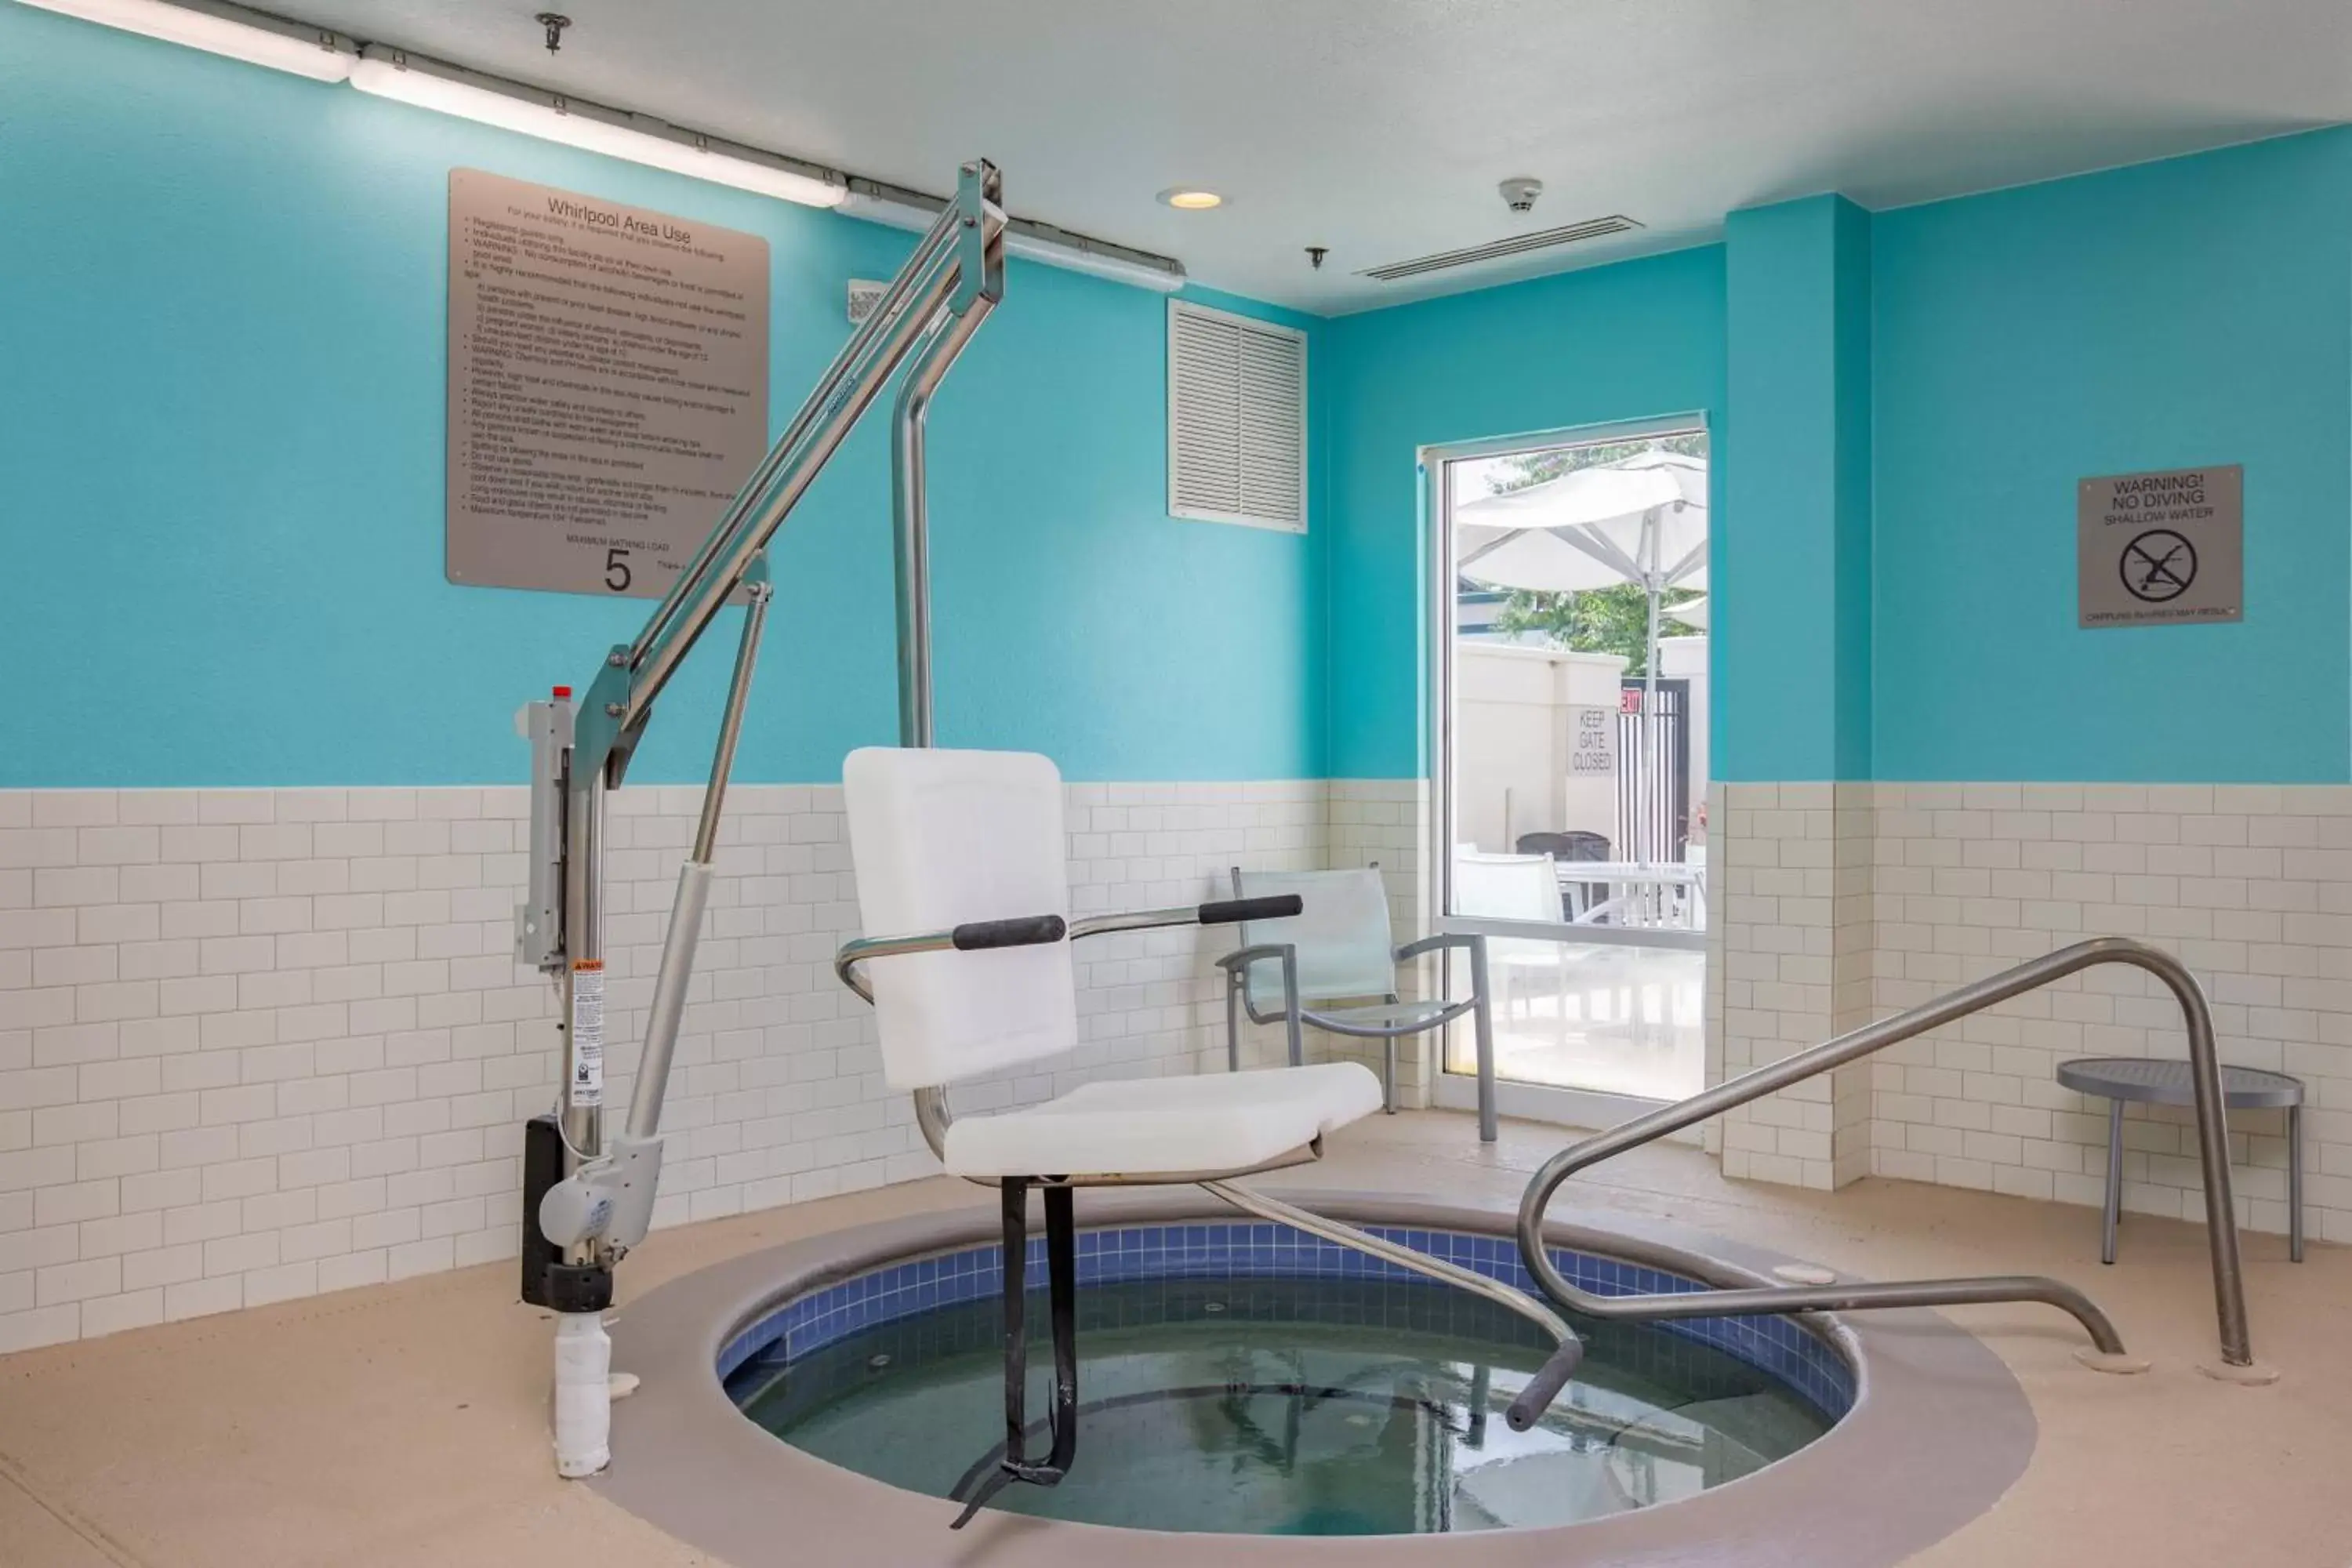 Fitness centre/facilities, Bathroom in SpringHill Suites Orlando Altamonte Springs/Maitland